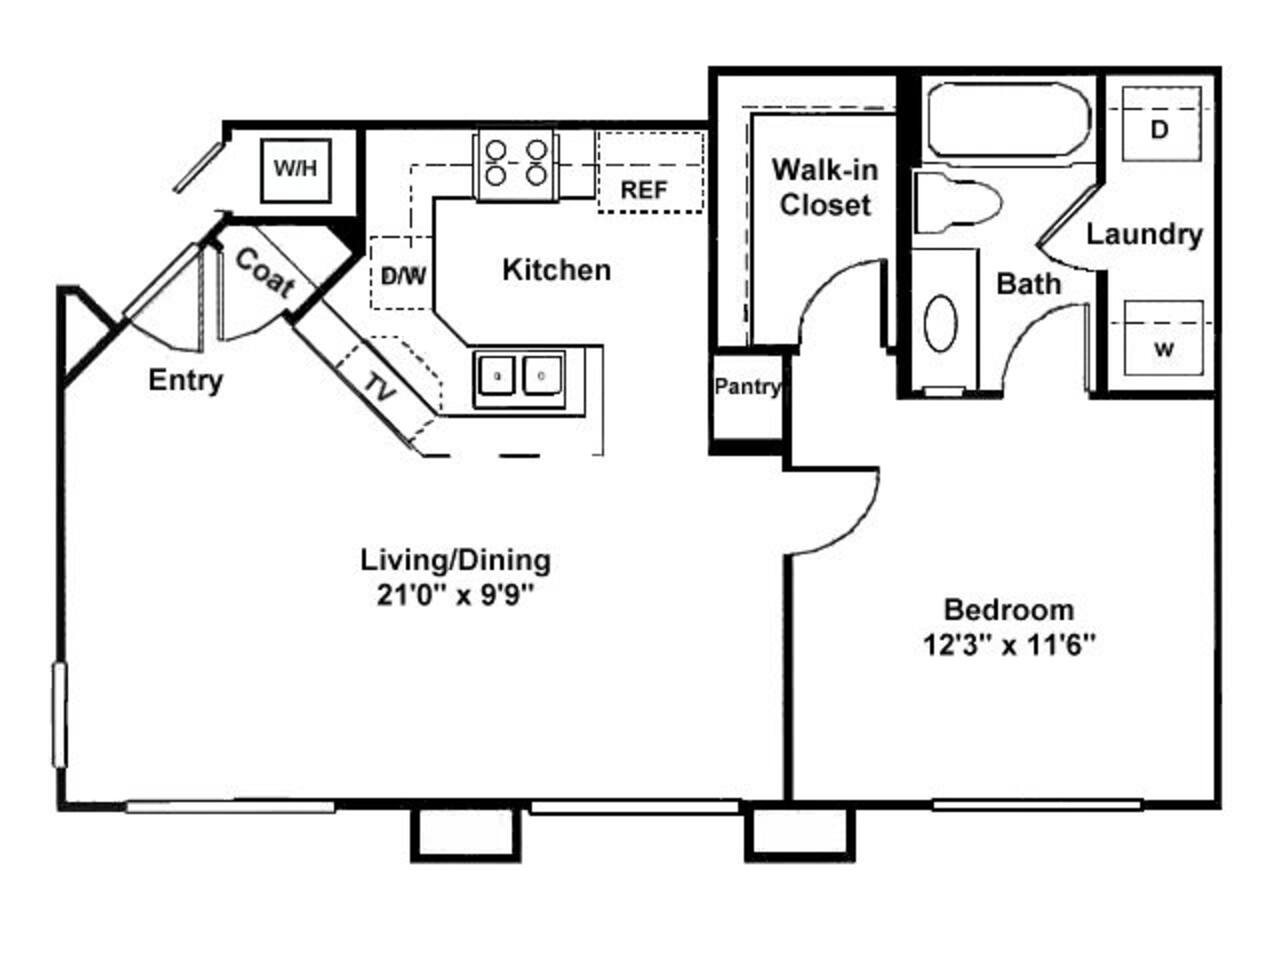 Floorplan diagram for Allison, showing 1 bedroom